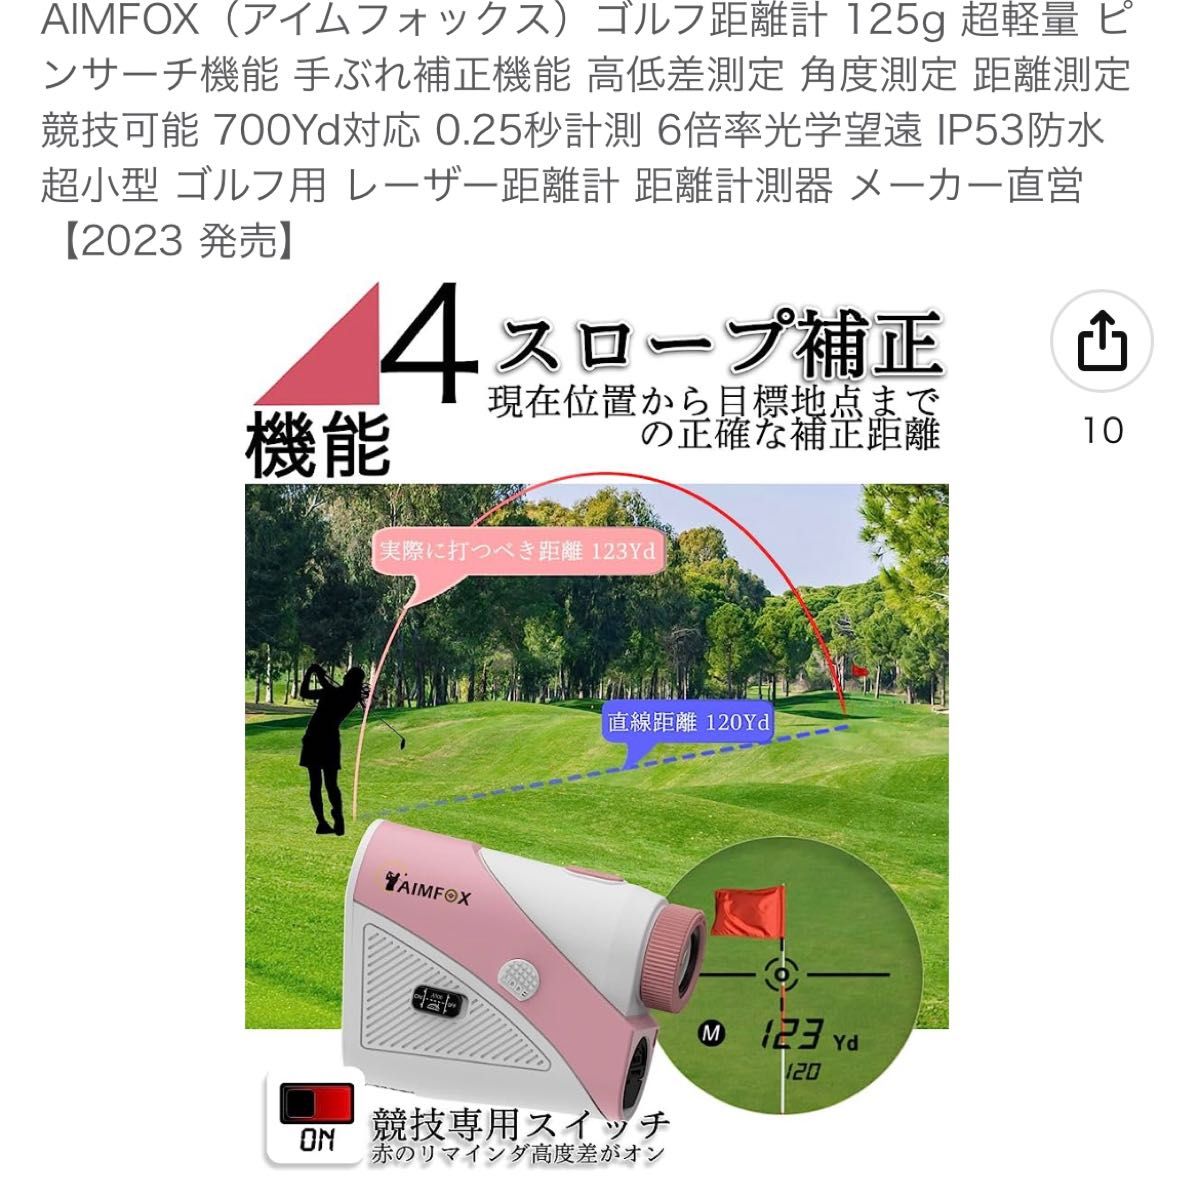 AIMFOX（アイムフォックス）ゴルフ距離計 125g 超軽量 ピンサーチ機能